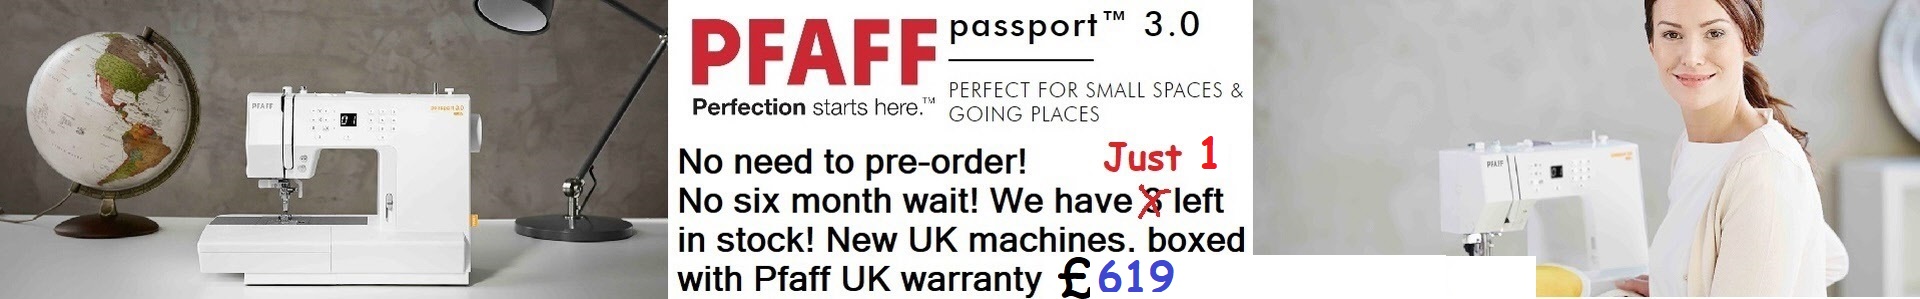 PFAFF® passport™ 3.0 Sewing Machine